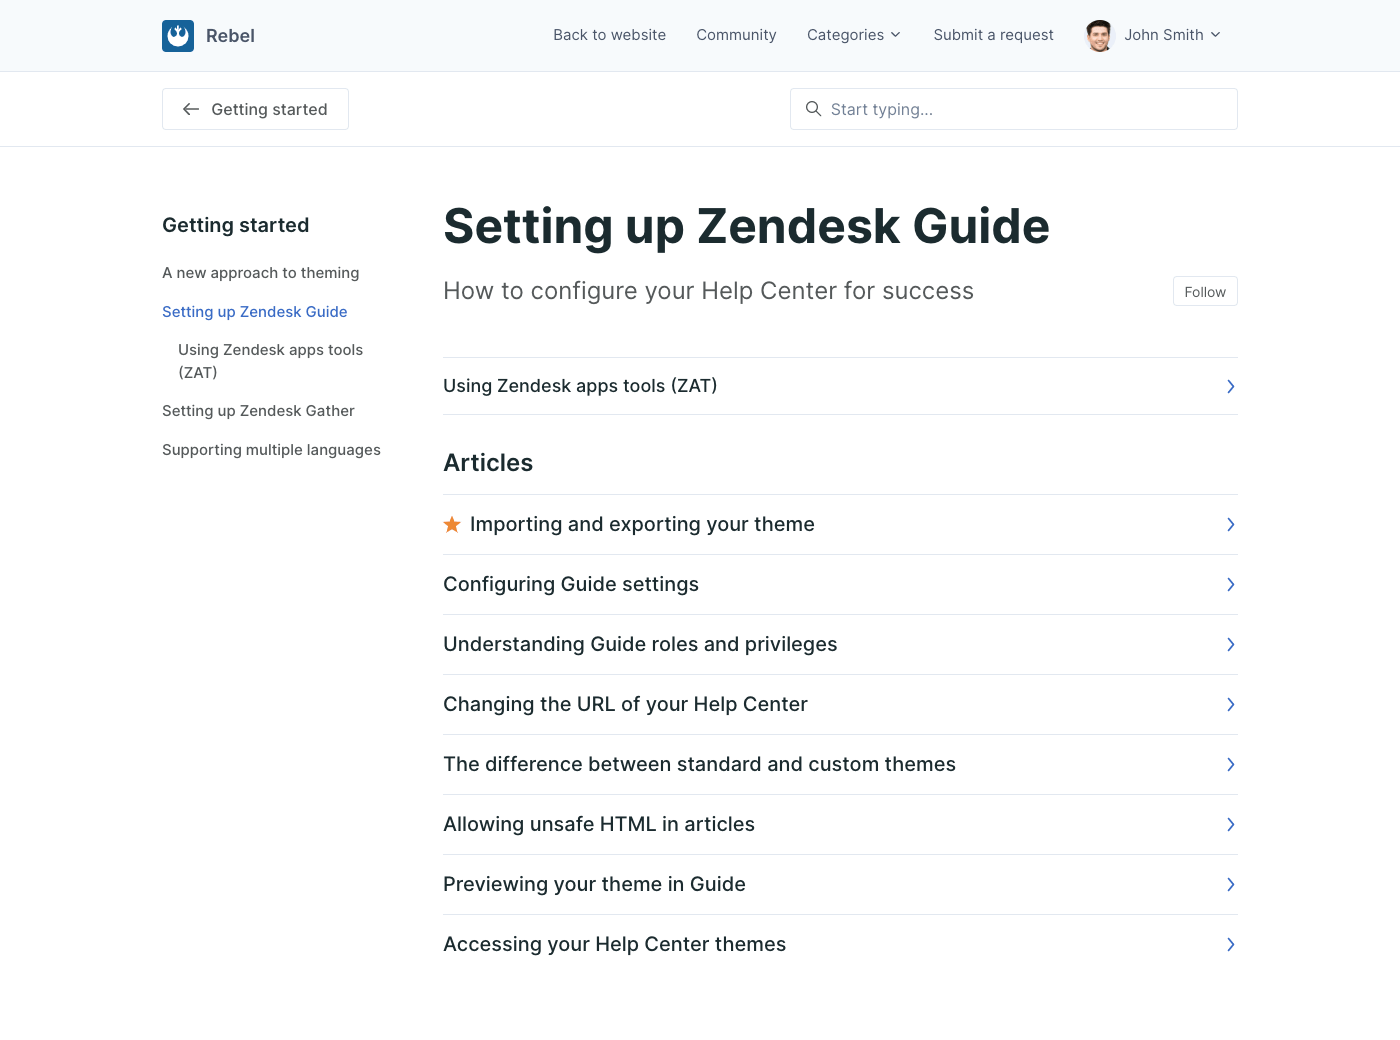 Rebel Zendesk Guide theme - Screenshot 4